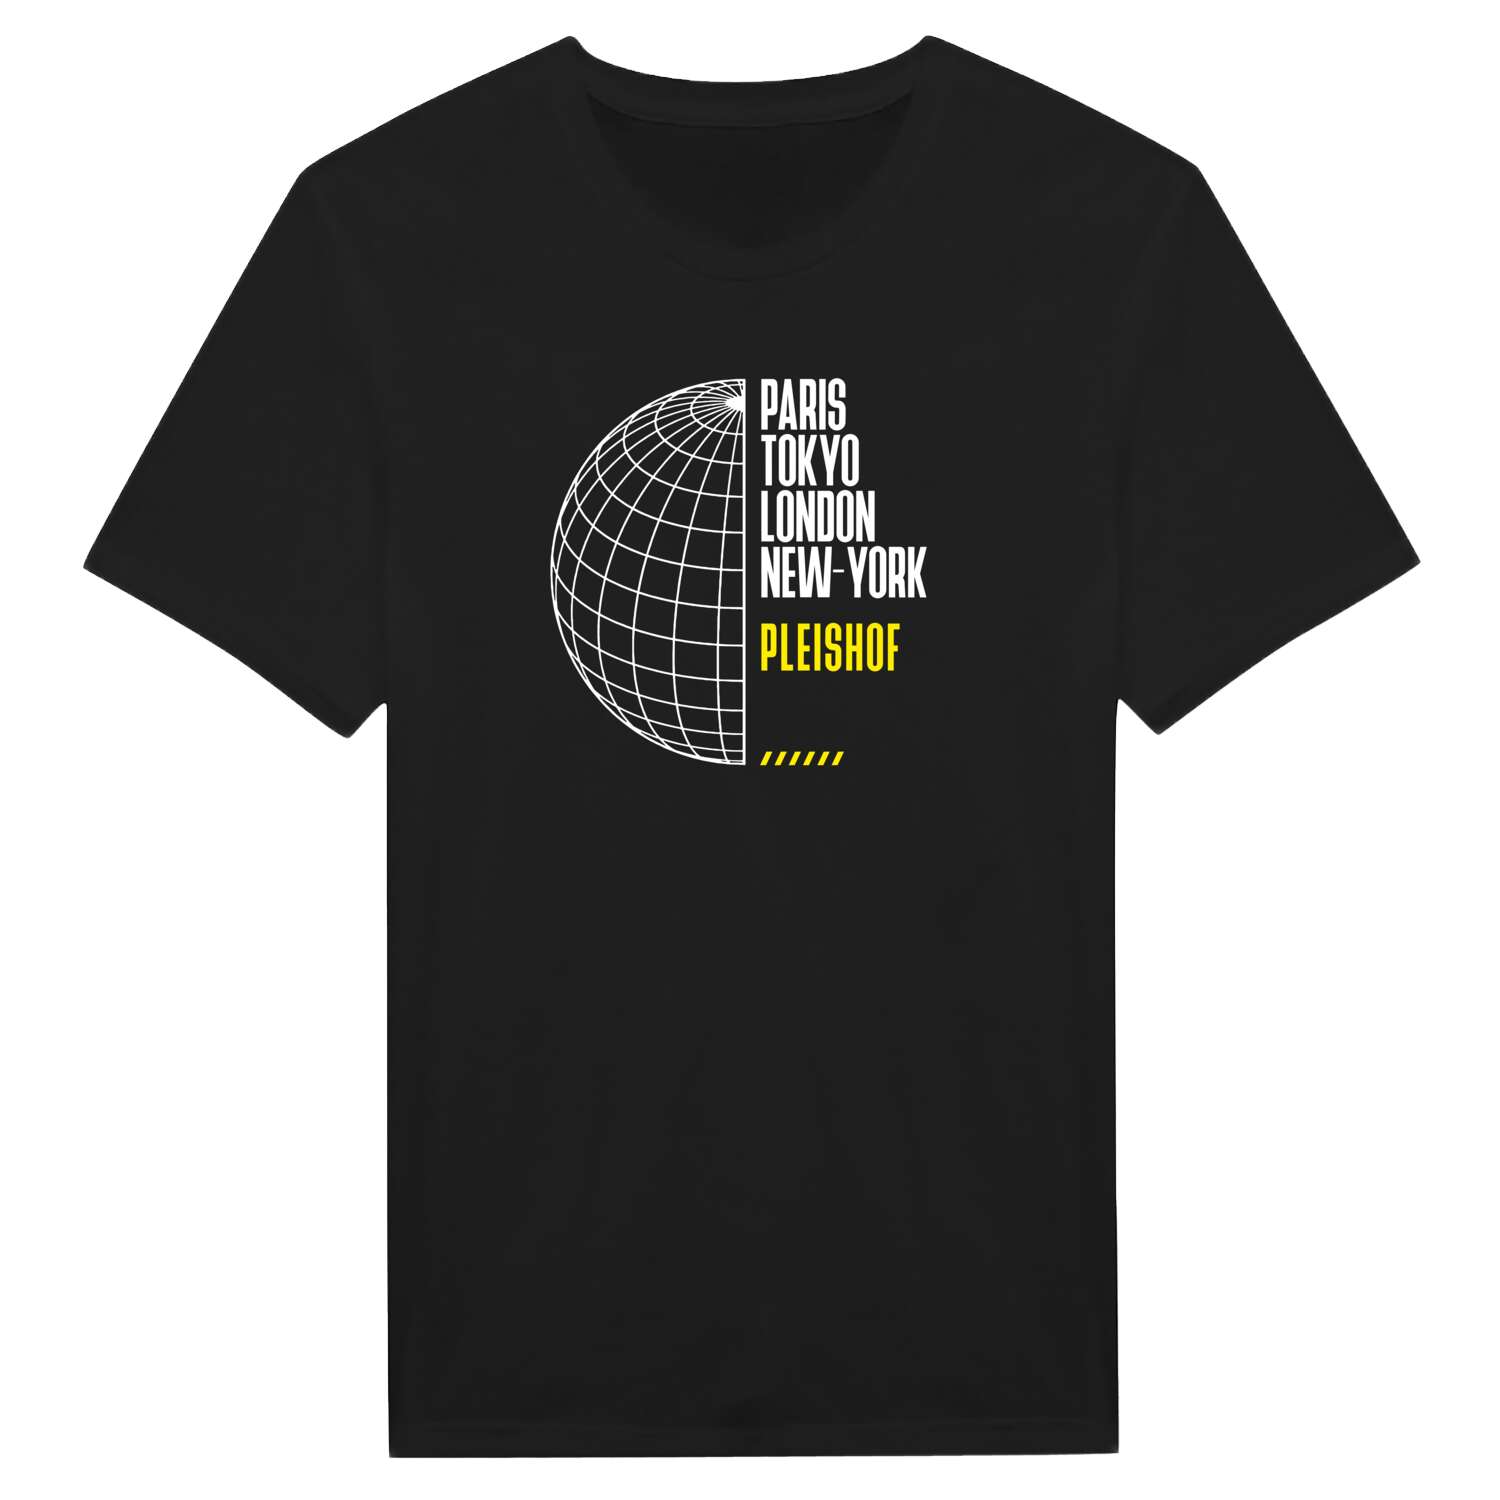 Pleishof T-Shirt »Paris Tokyo London«